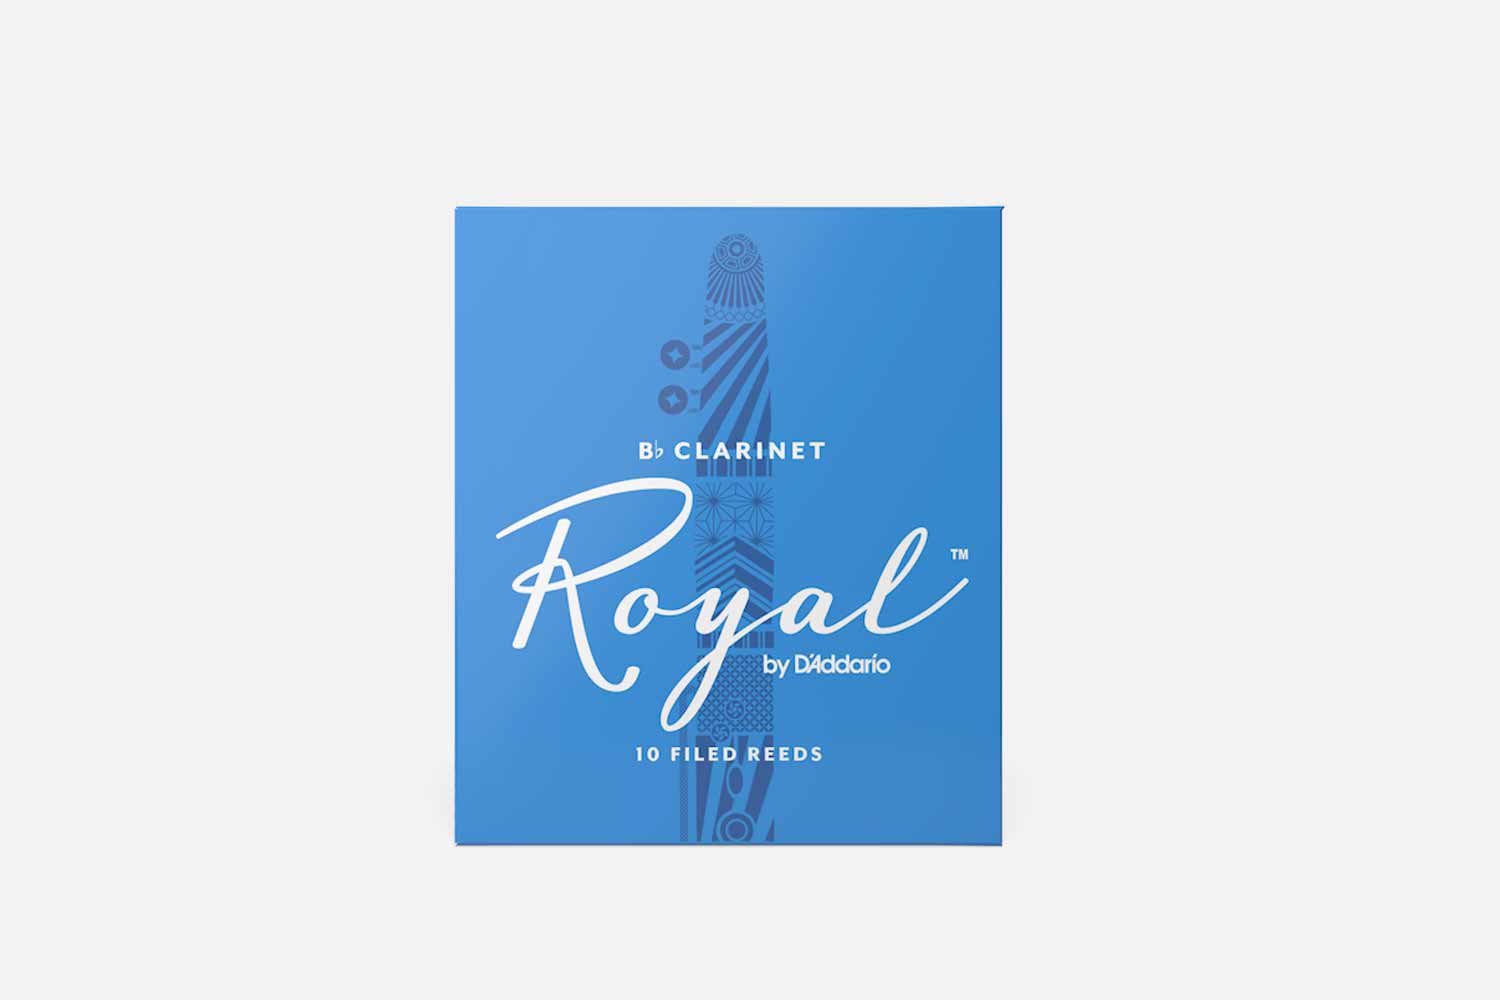 D'Addario Royal rieten voor Bb klarinet (5437508026532)